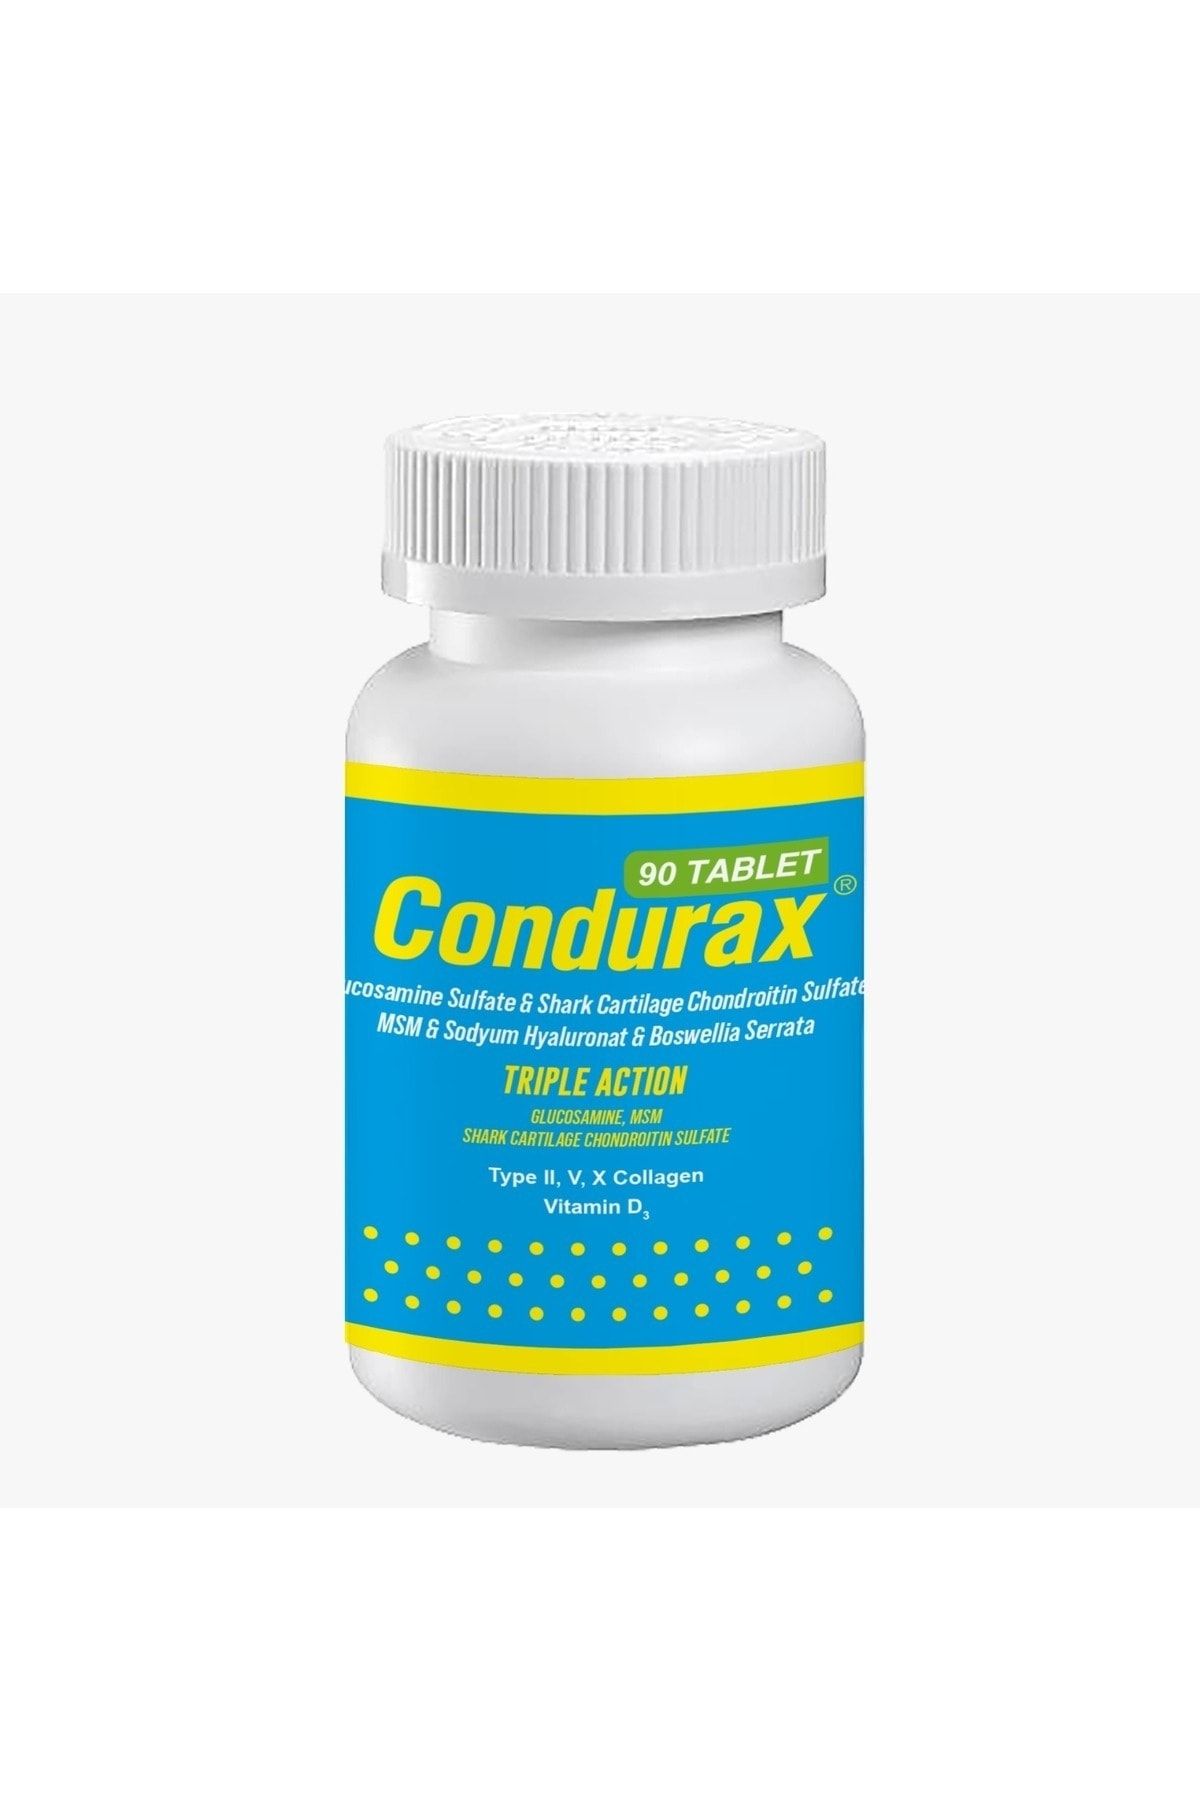 Chondurax Condurax Glucosamine Shark Cartilage Chondroitin Msm 90 Tablet